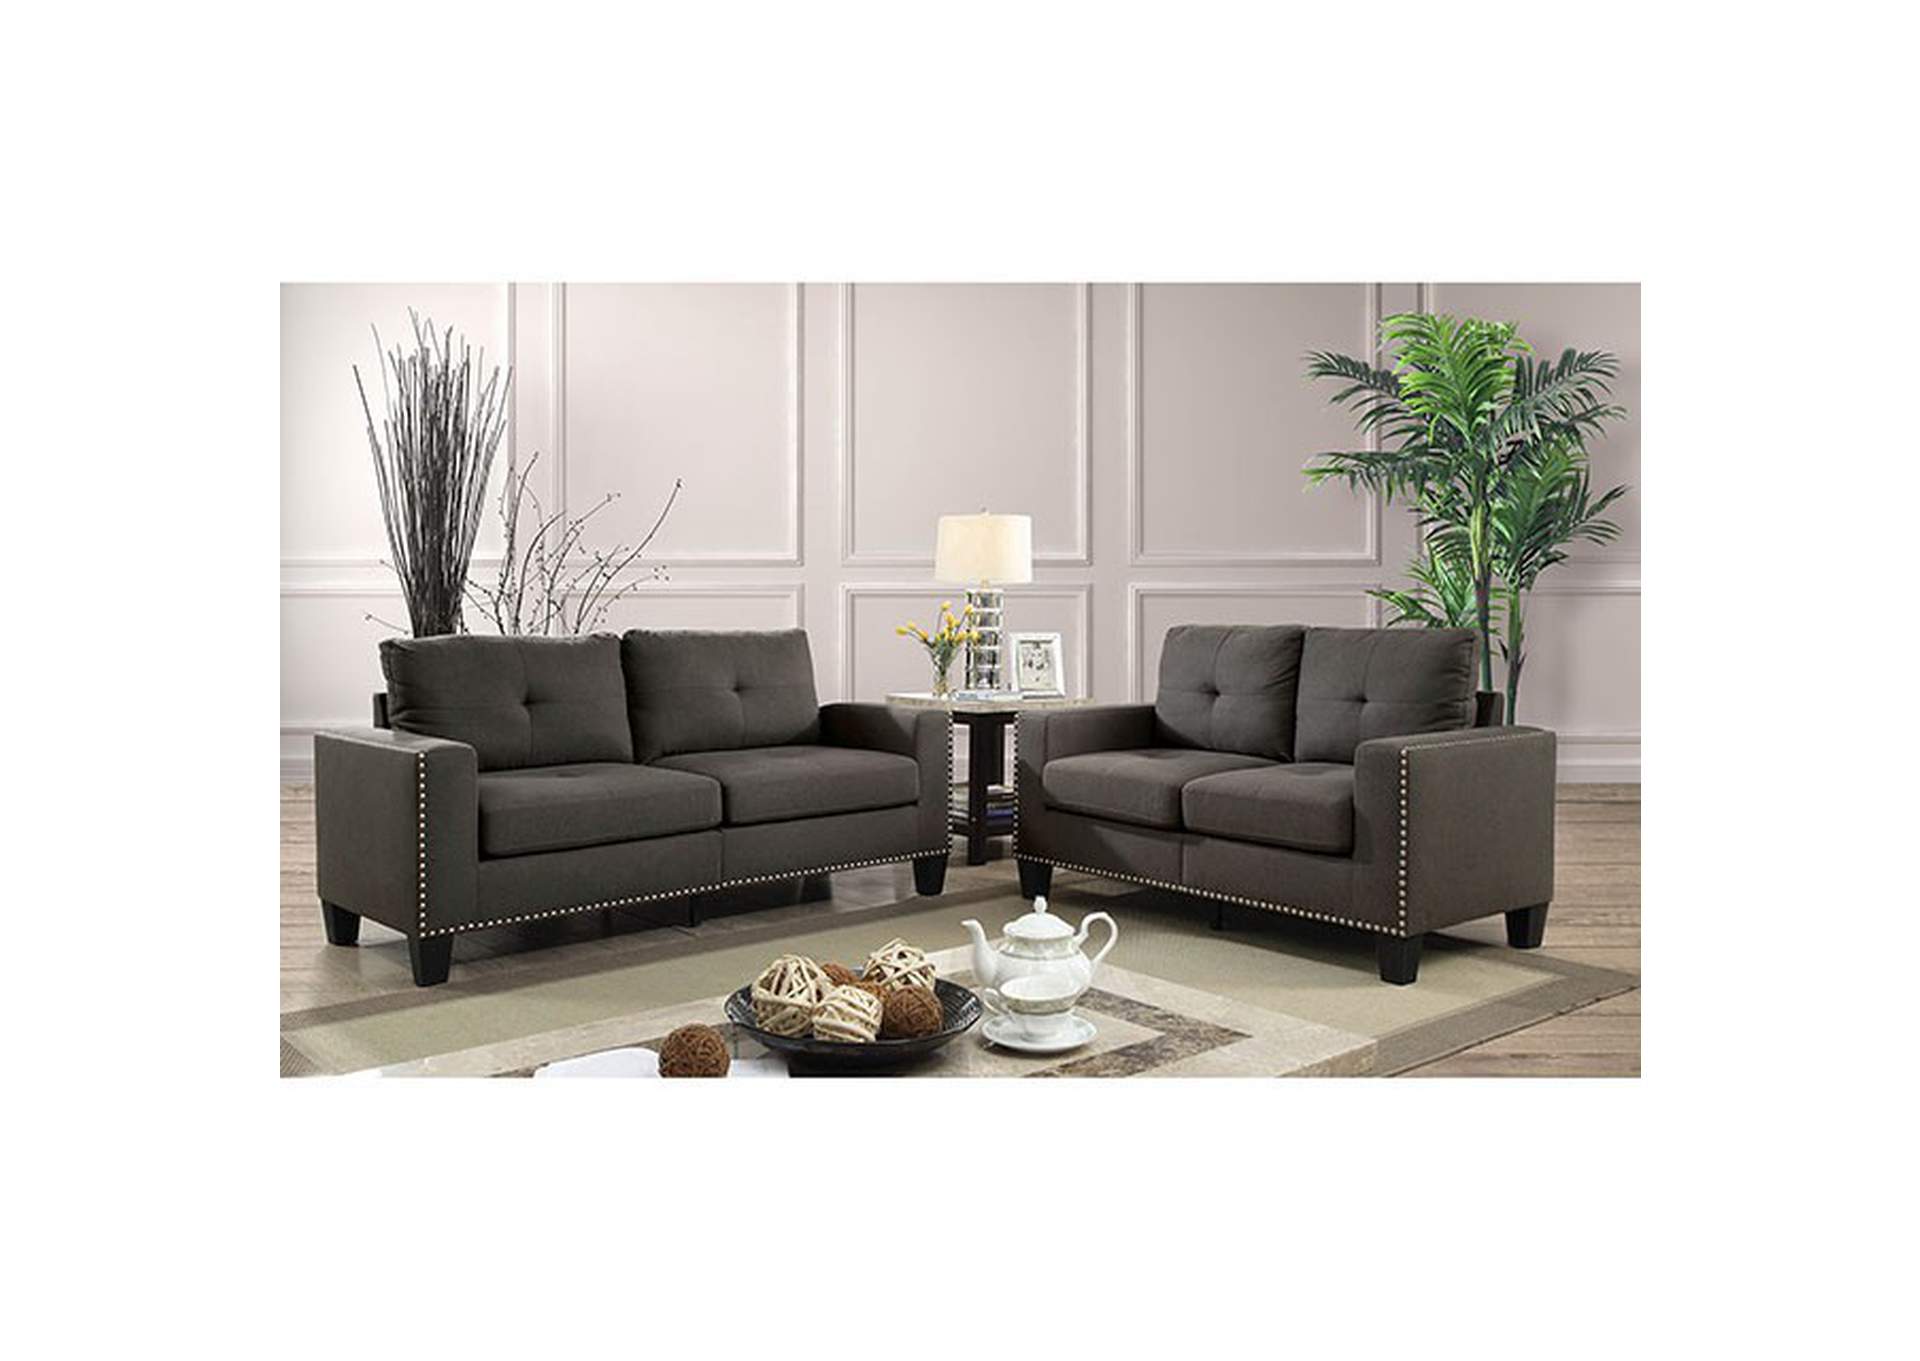 Attwell Sofa,Furniture of America